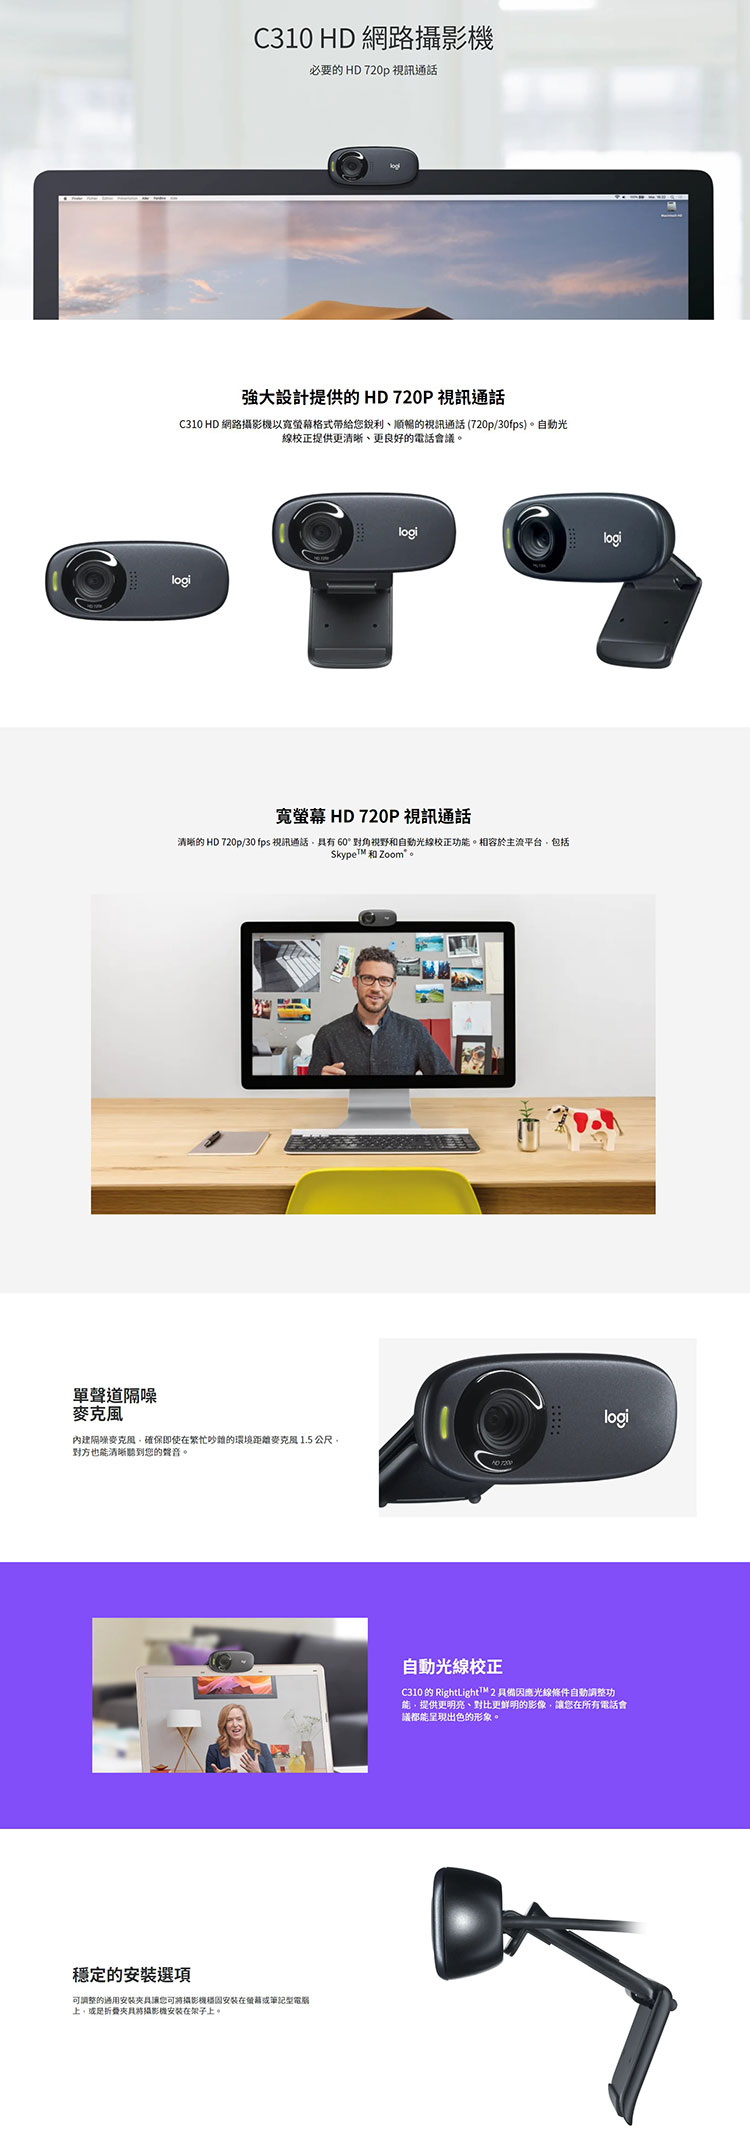 FireShot-Capture-8253---配備隔噪麥克風，提供-720p-視訊的羅技-C310-HD-網路攝影機-內文官網.jpg